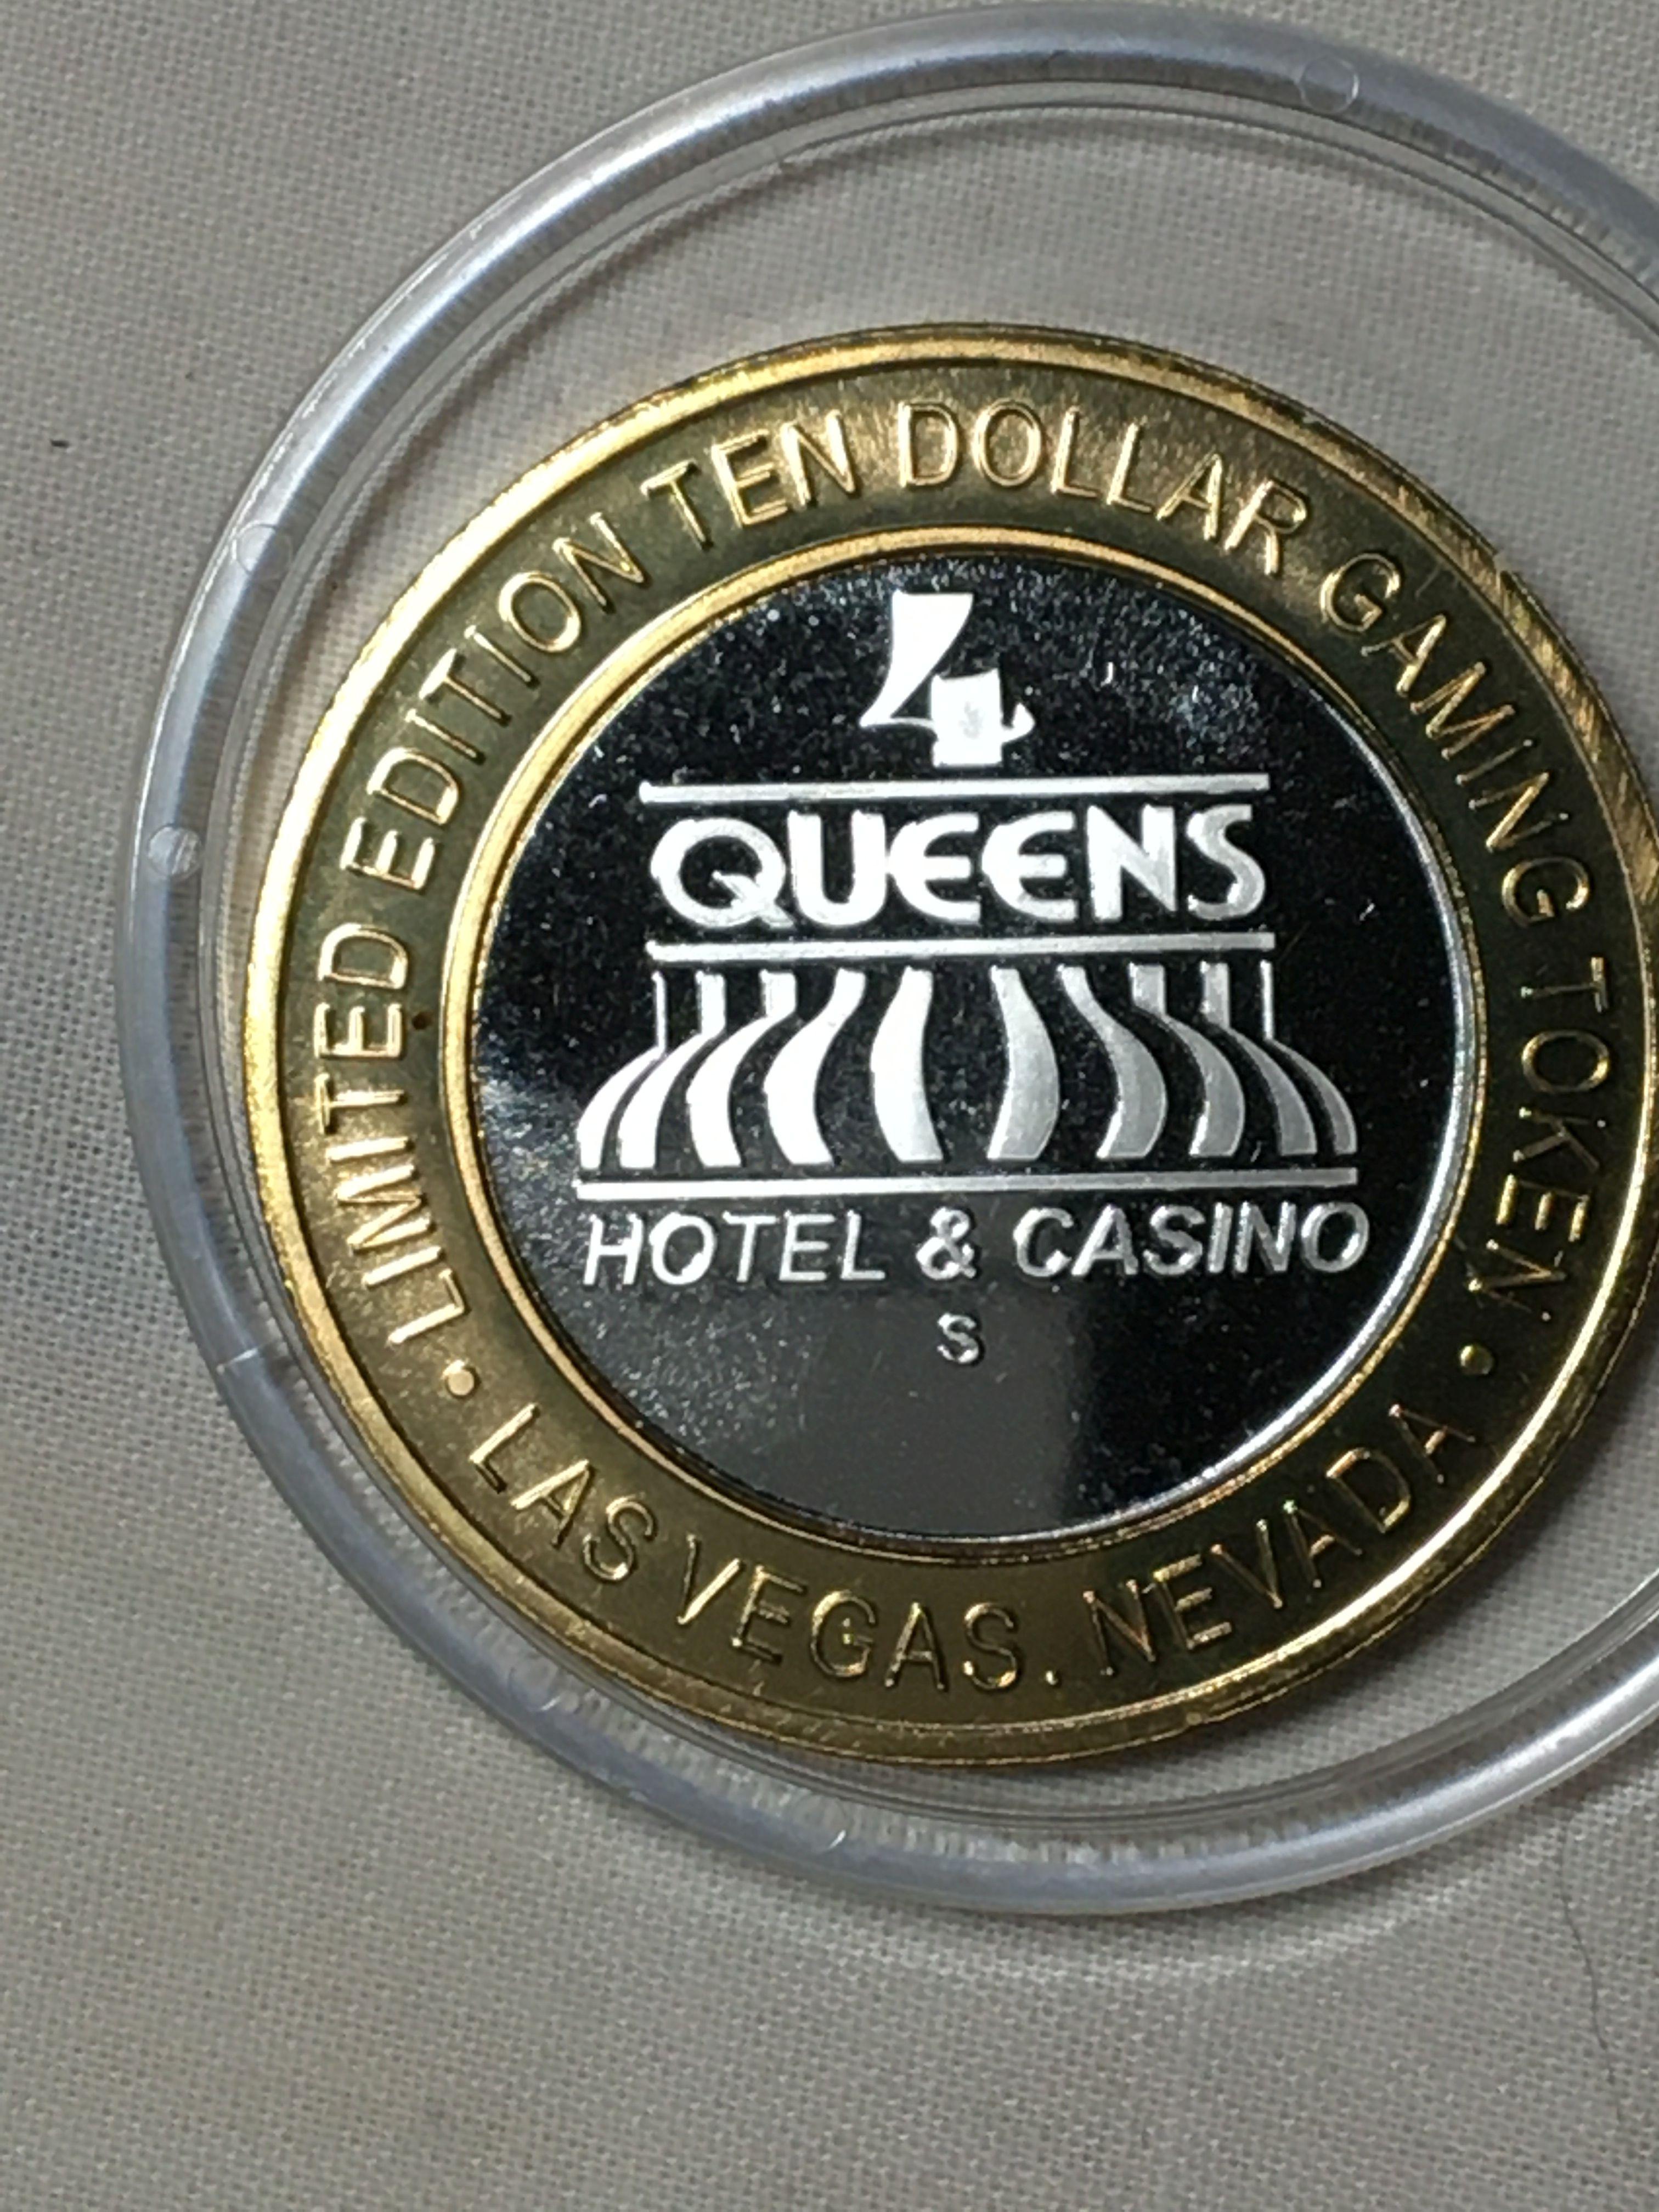 Four Queens $10.00 Las Vegas Gaming Token